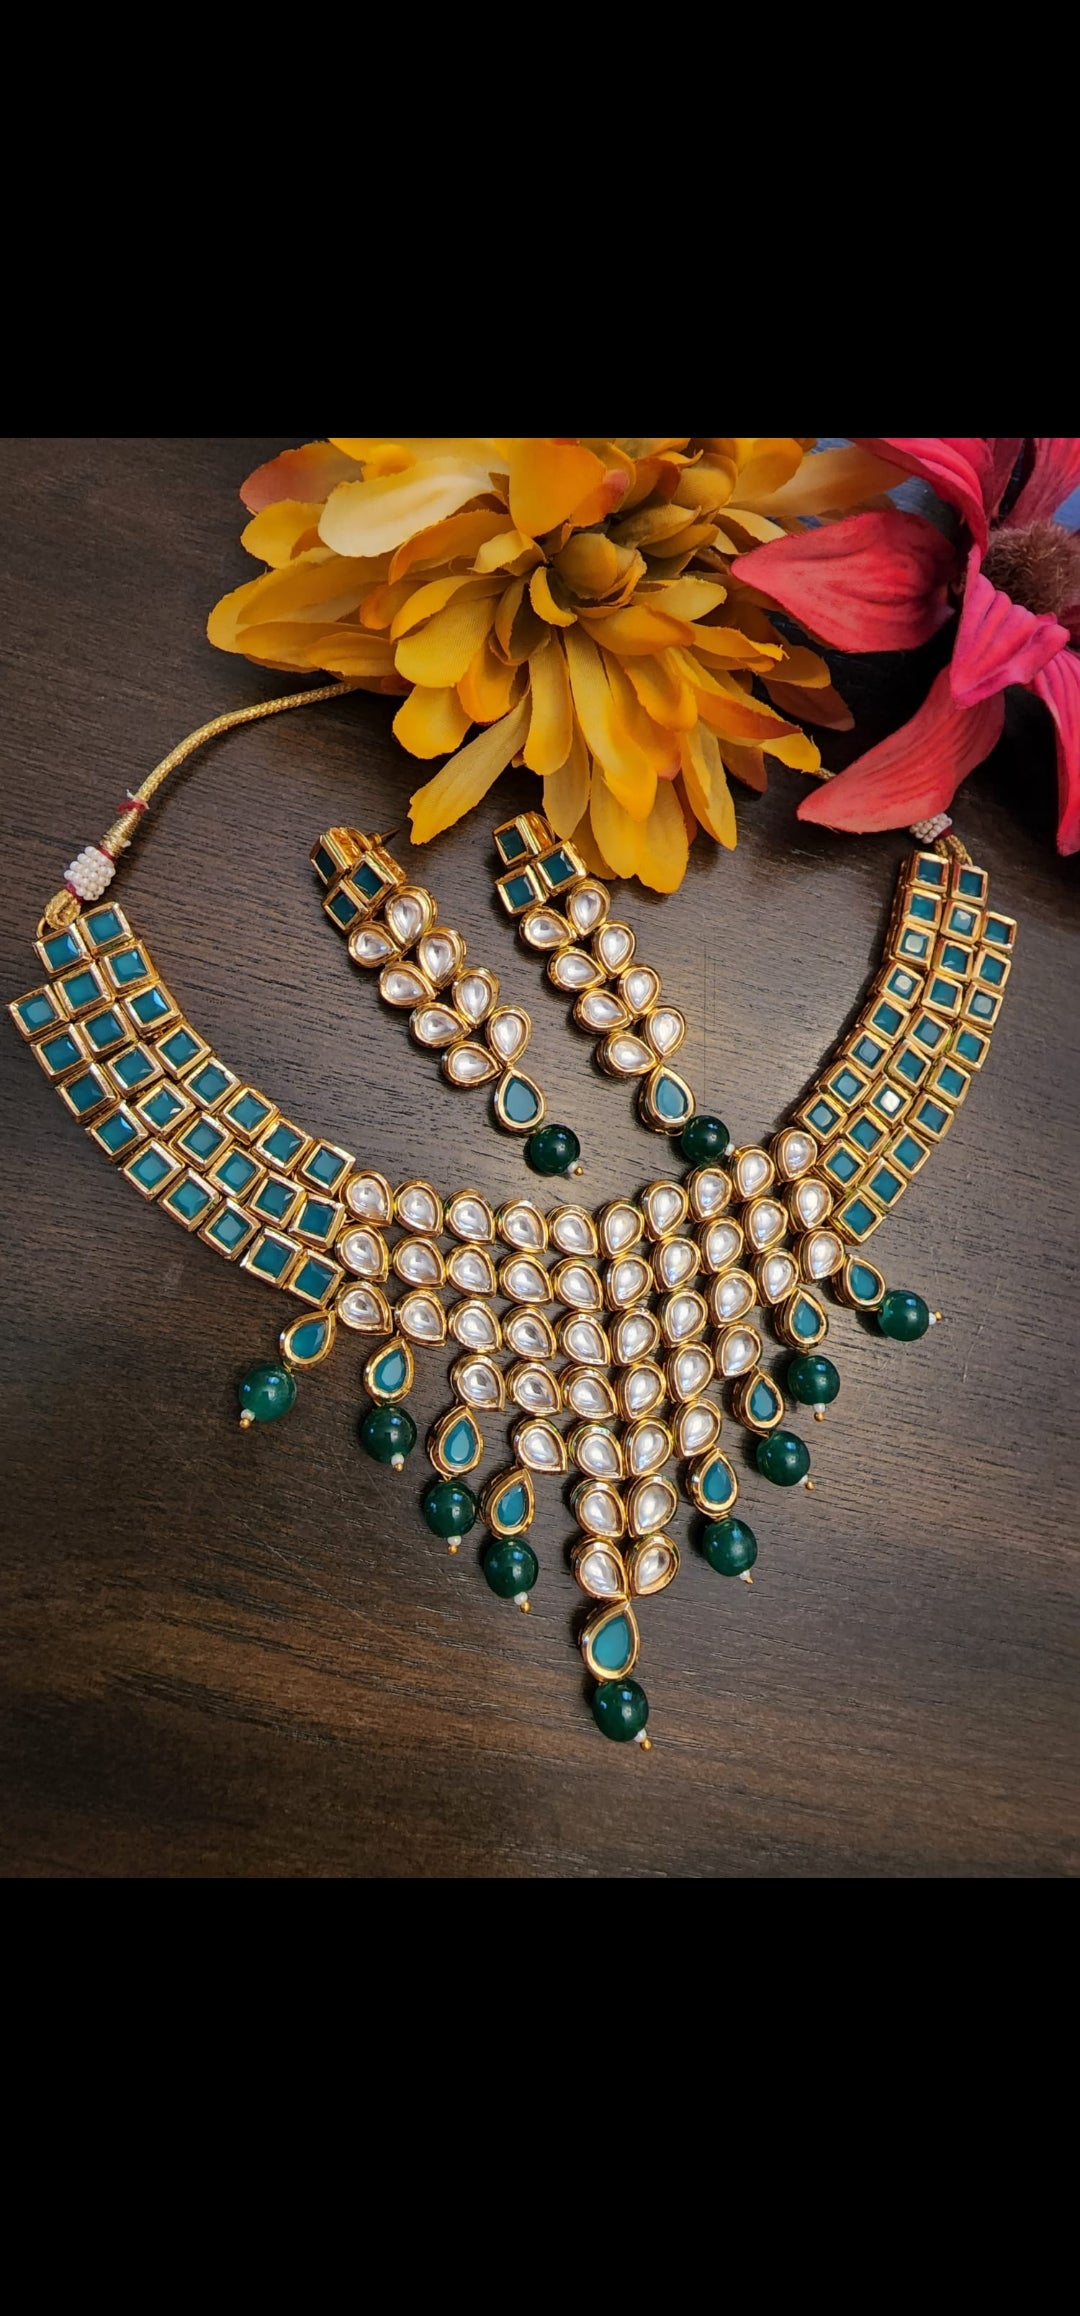 Premium Kundan Necklace, Earrings and Mangtika